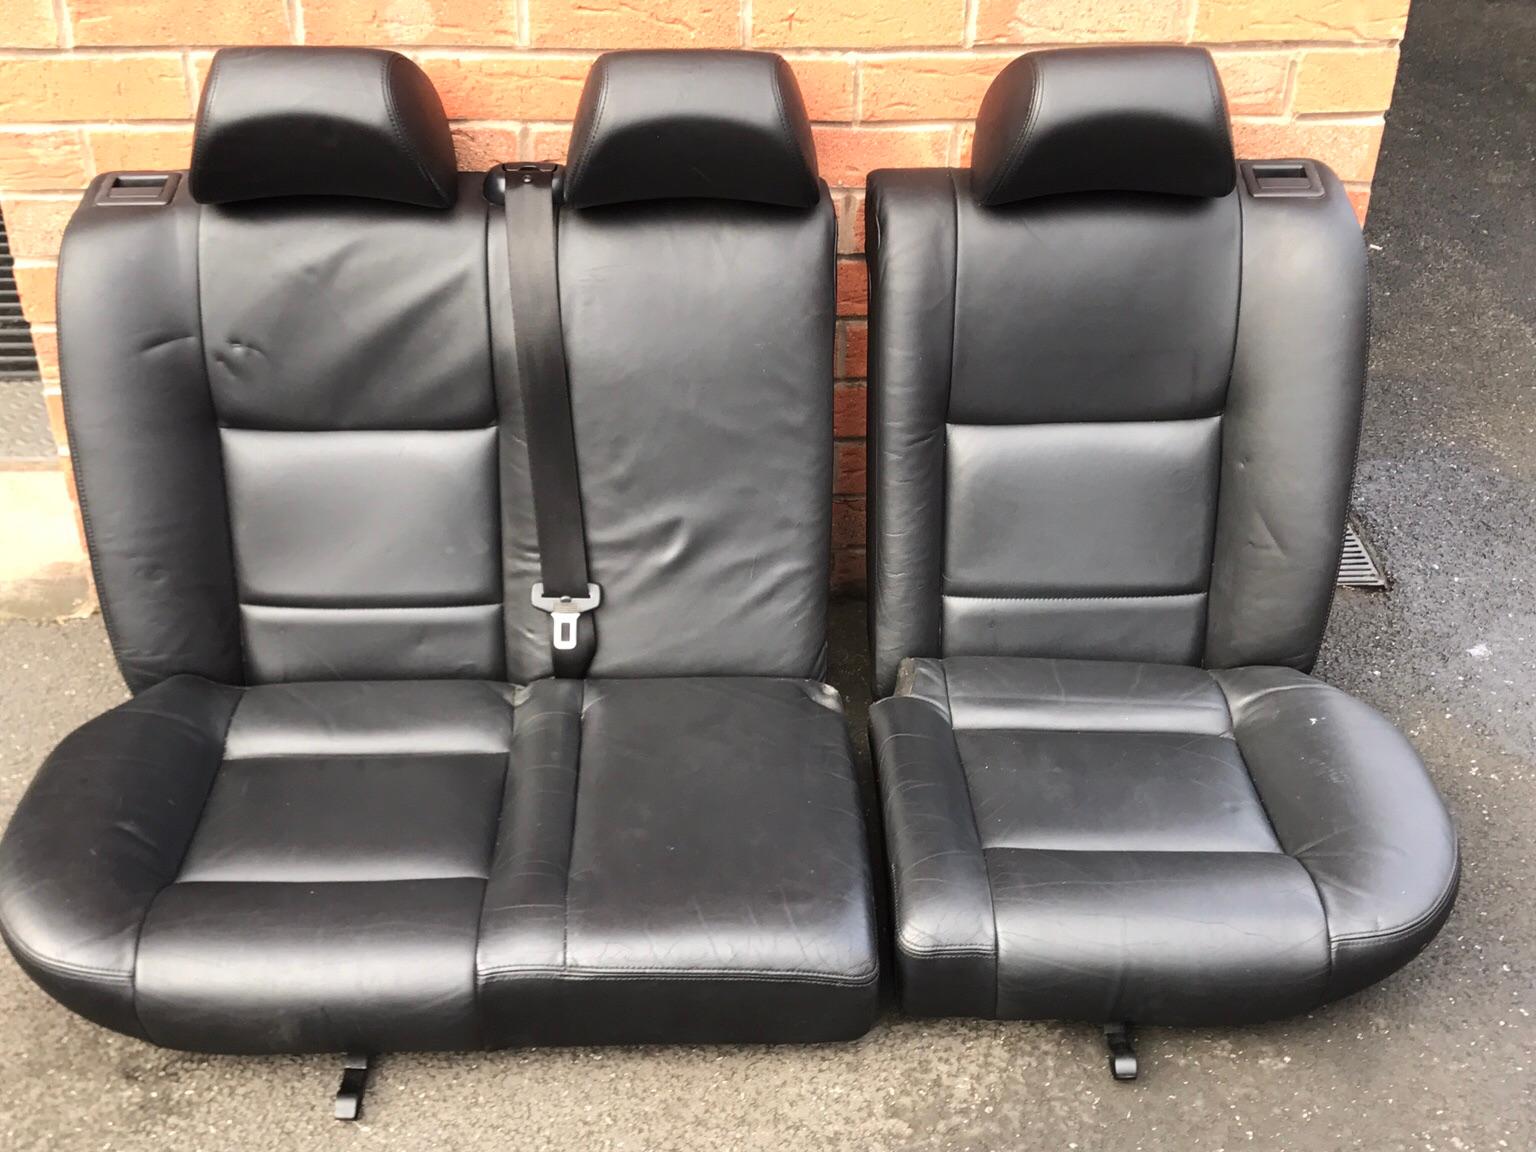 Golf mk4 leather seats - gti/v4 4 motion r32 in WF10 Castleford for £80 ...